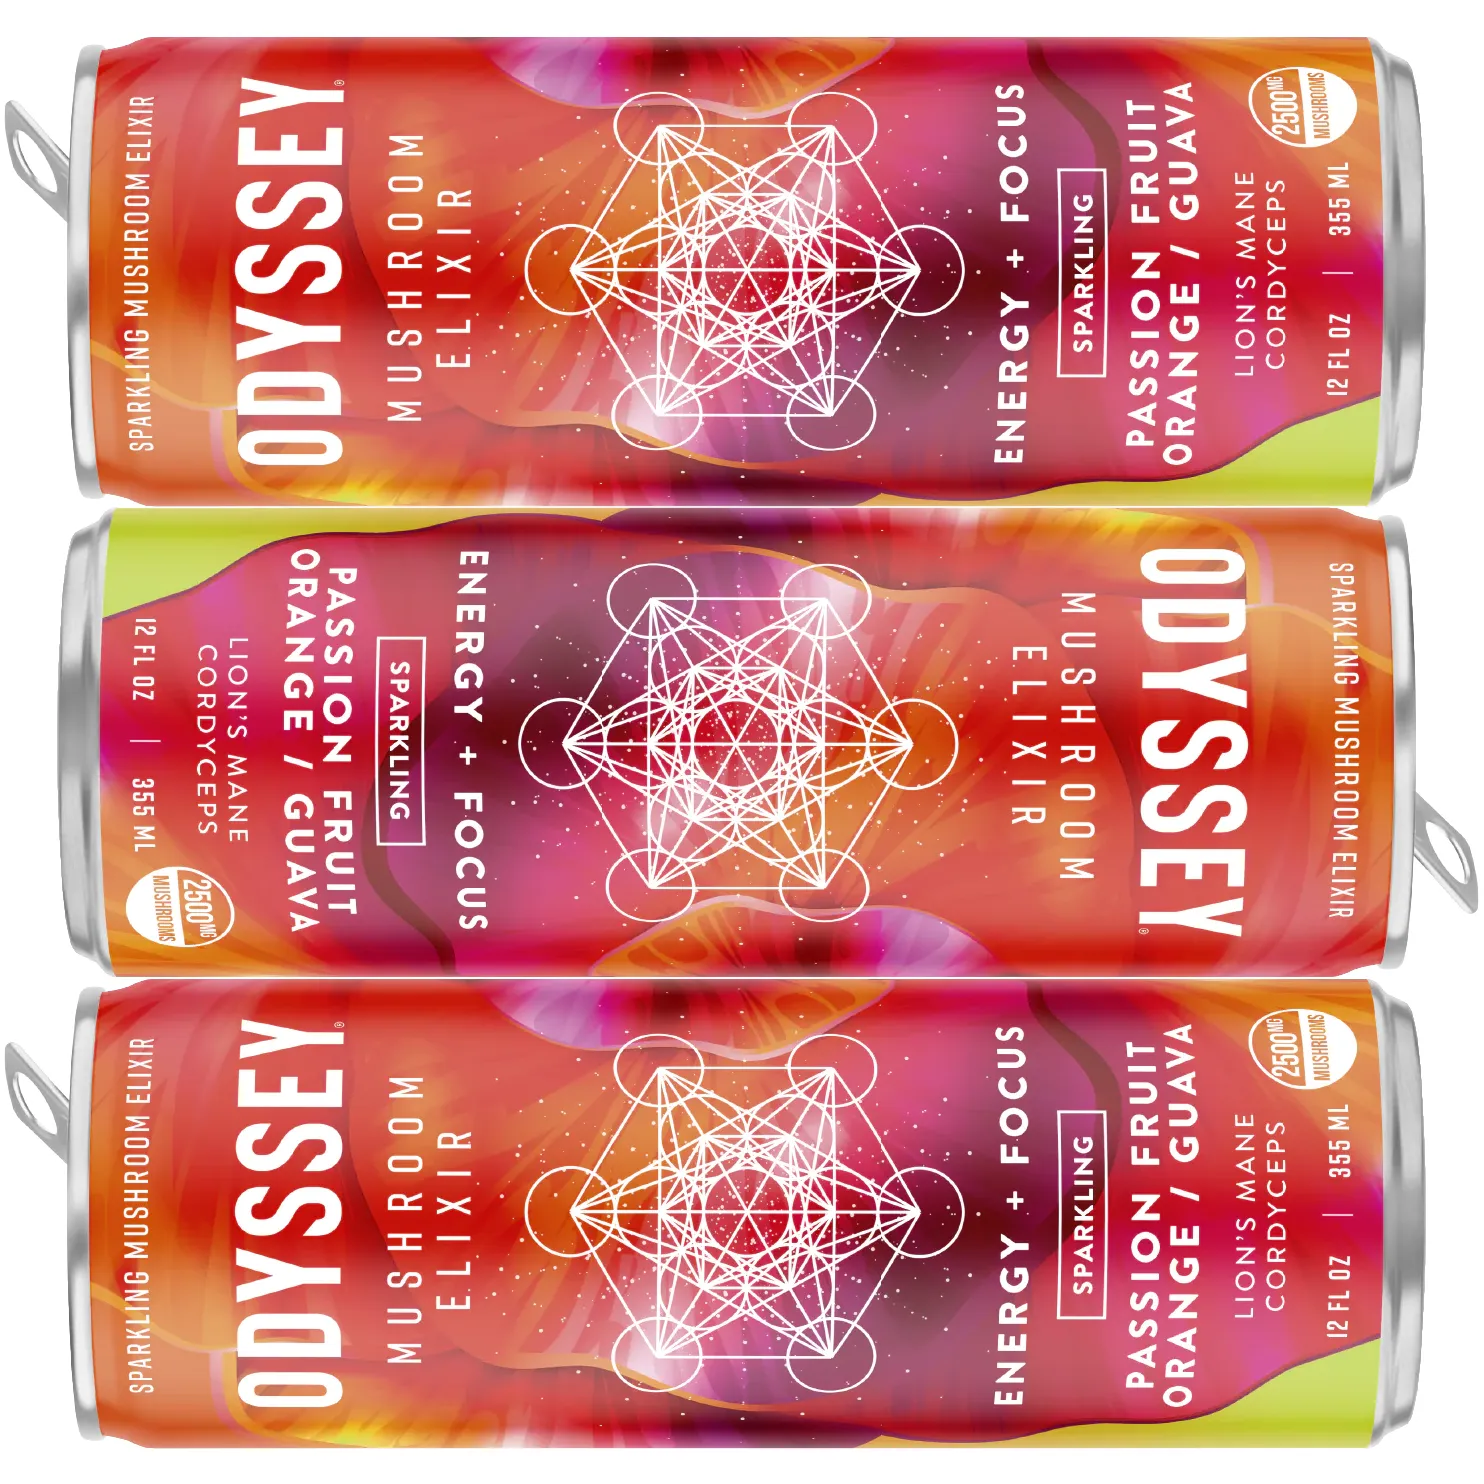 Free Can Of Odyssey Sparkling Mushroom Elixir After Rebate